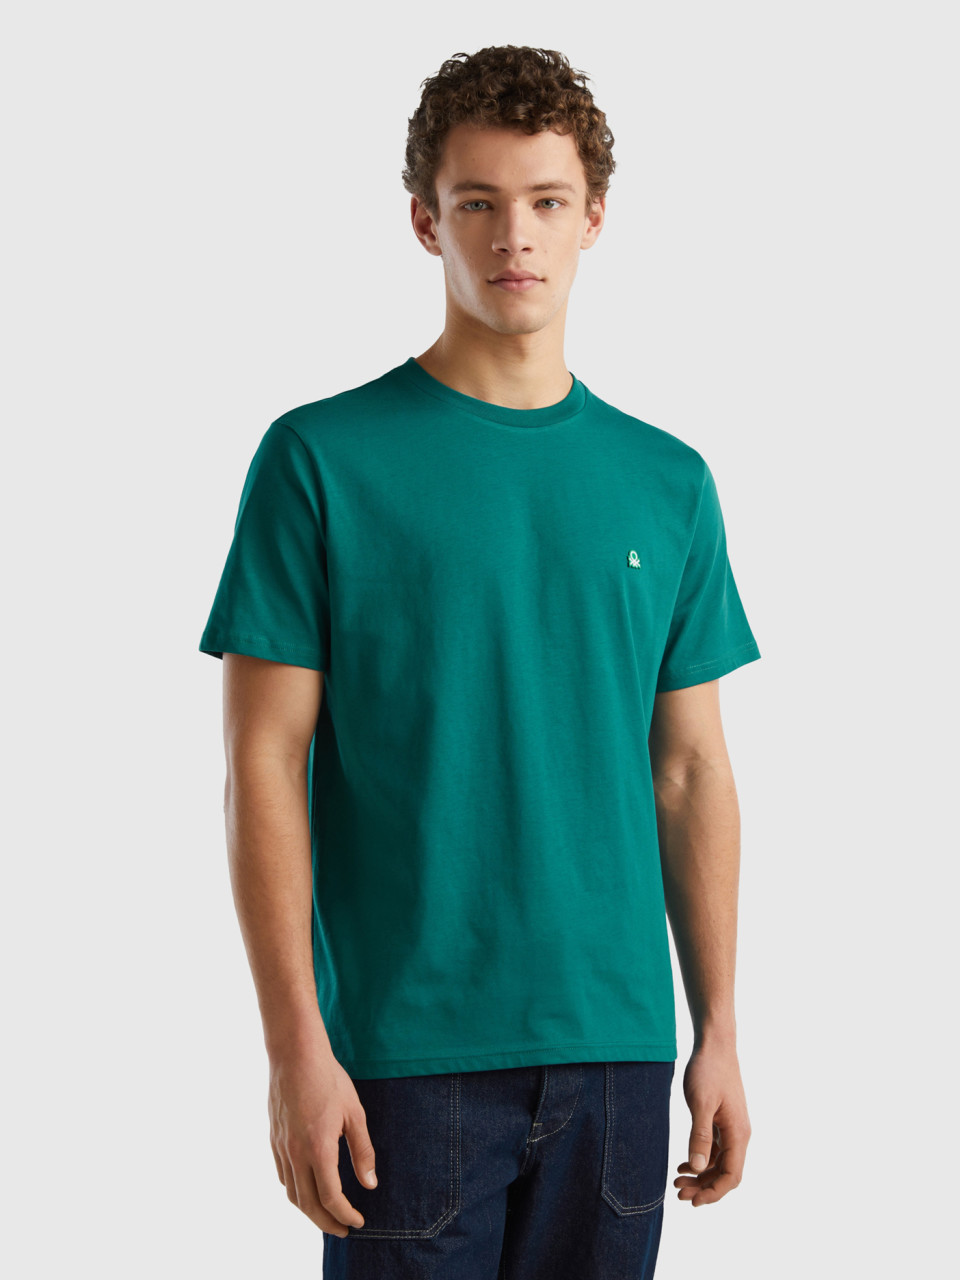 Benetton, 100% Organic Cotton Basic T-shirt, Teal, Men